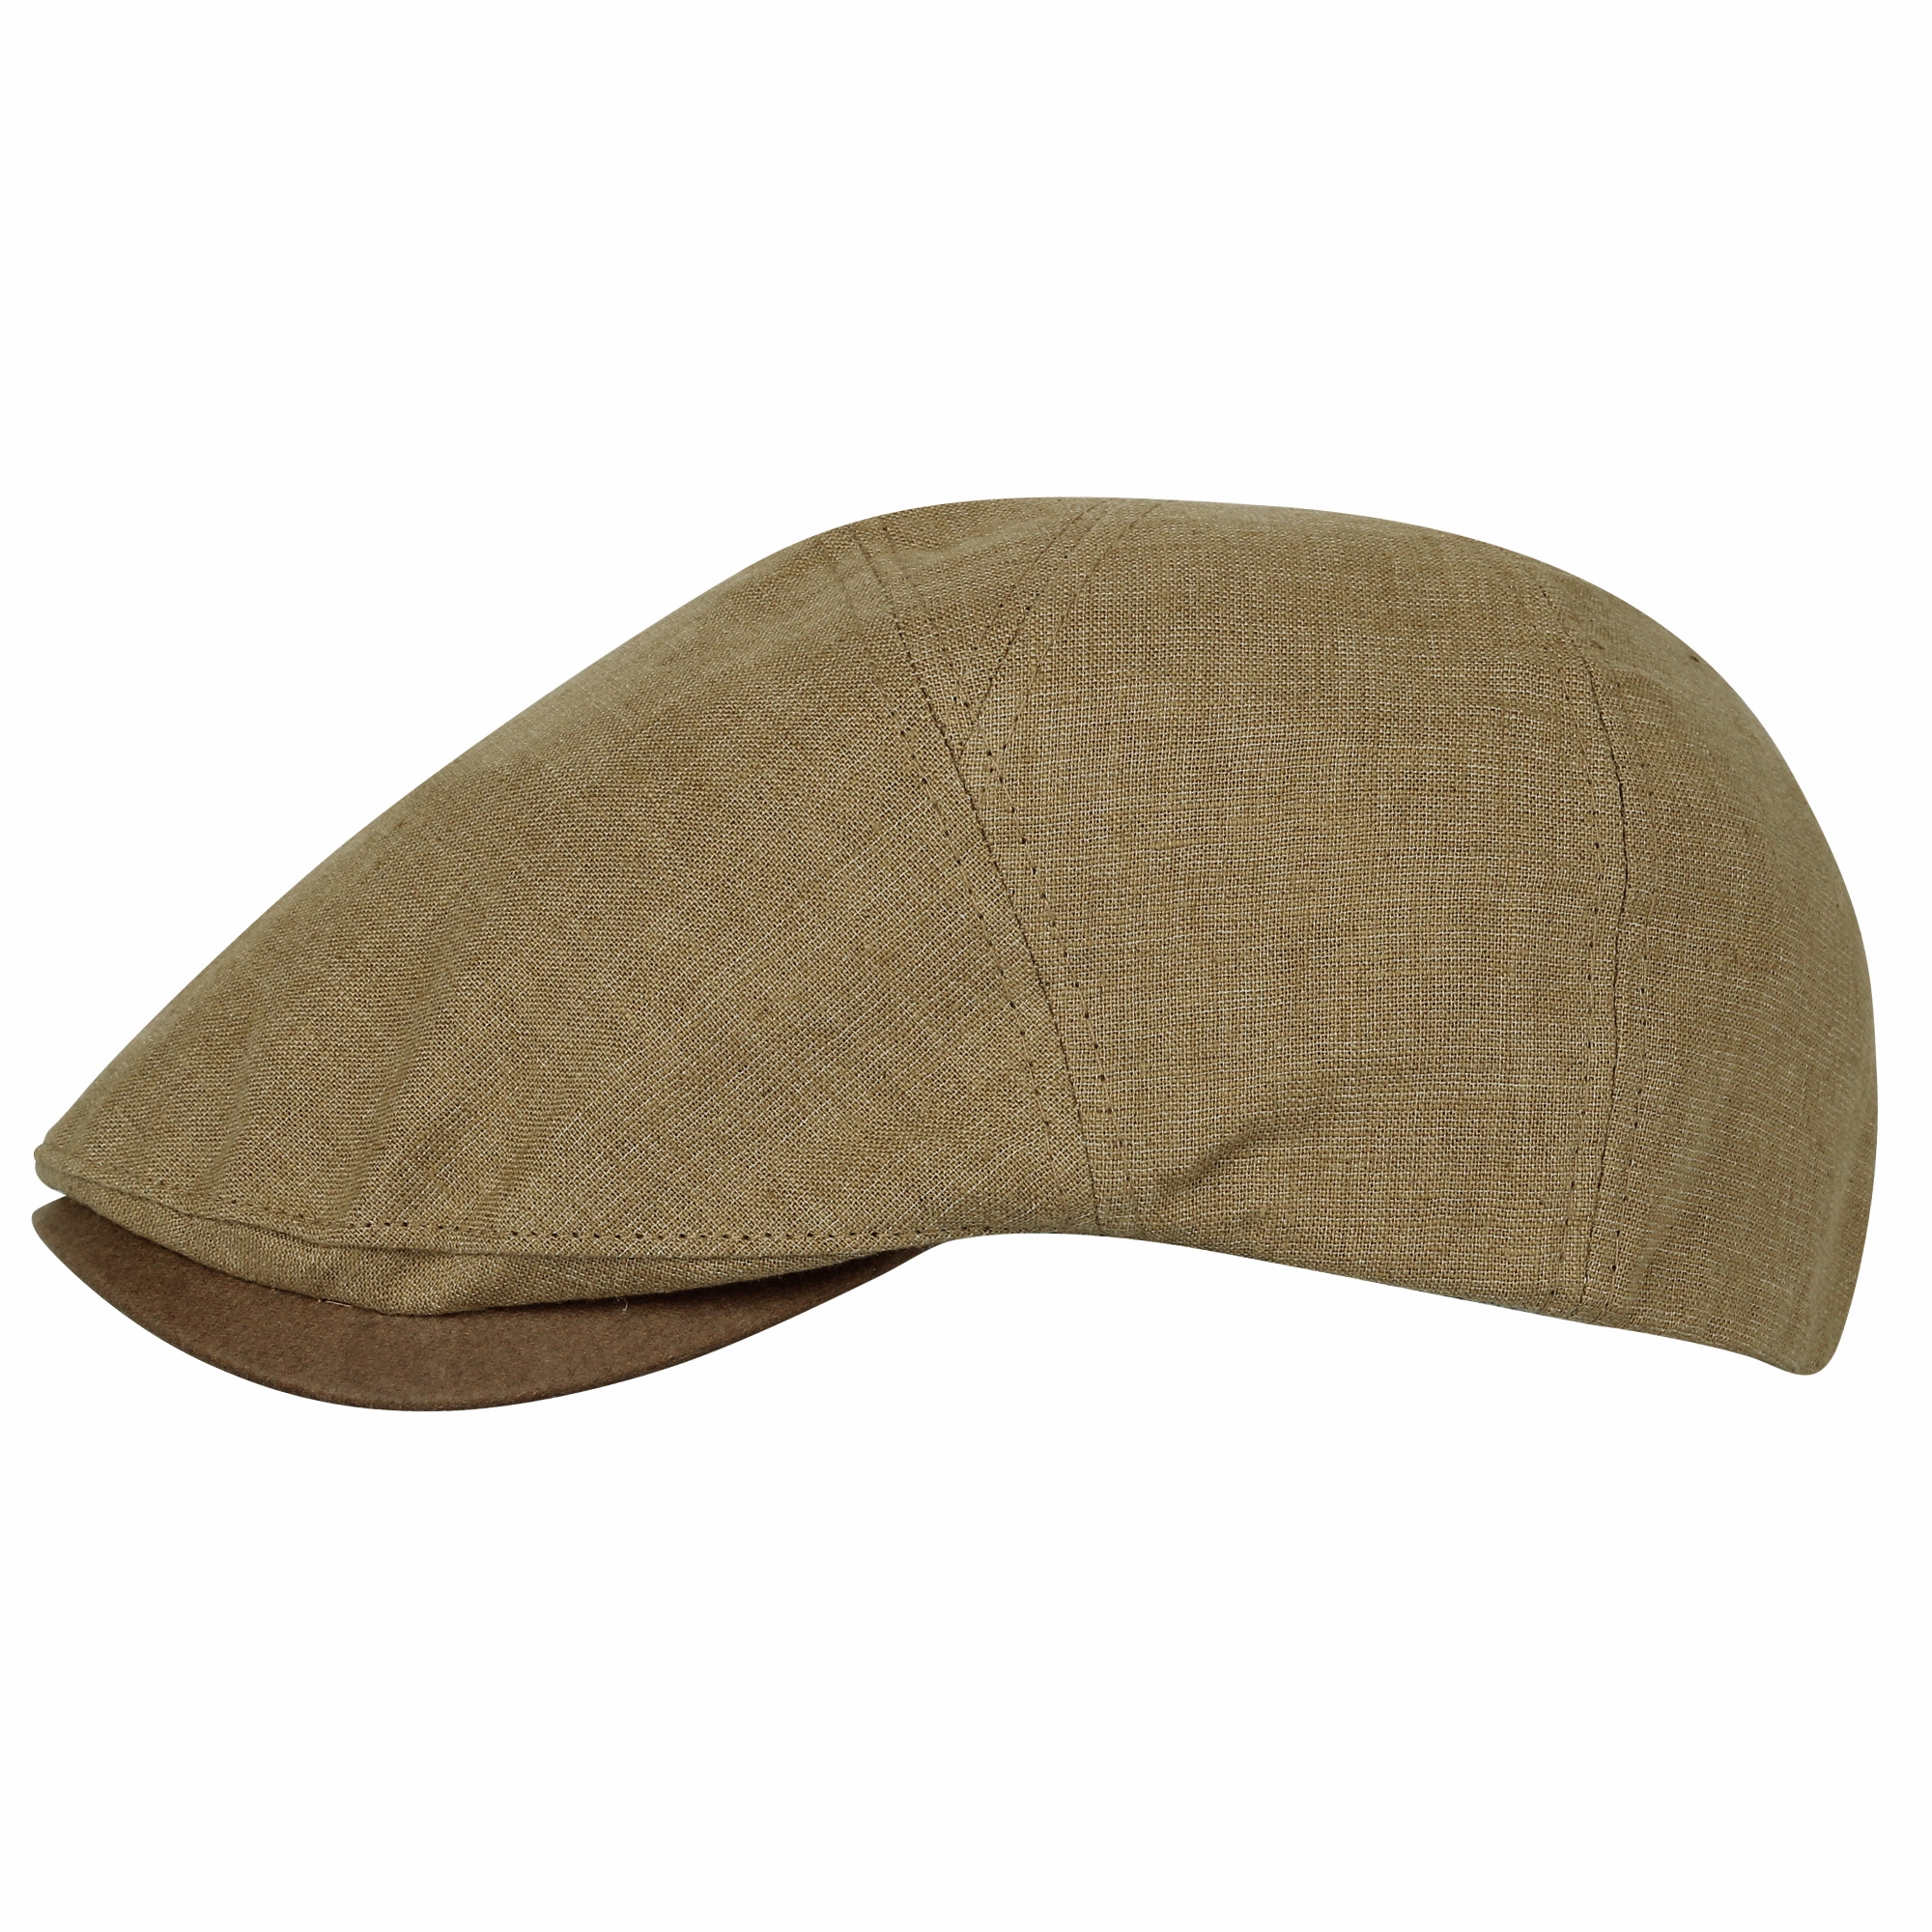 WITHMOONS Newsboy Hat Faux Leather Brim Adjustable Flat Cap SL31273 | eBay